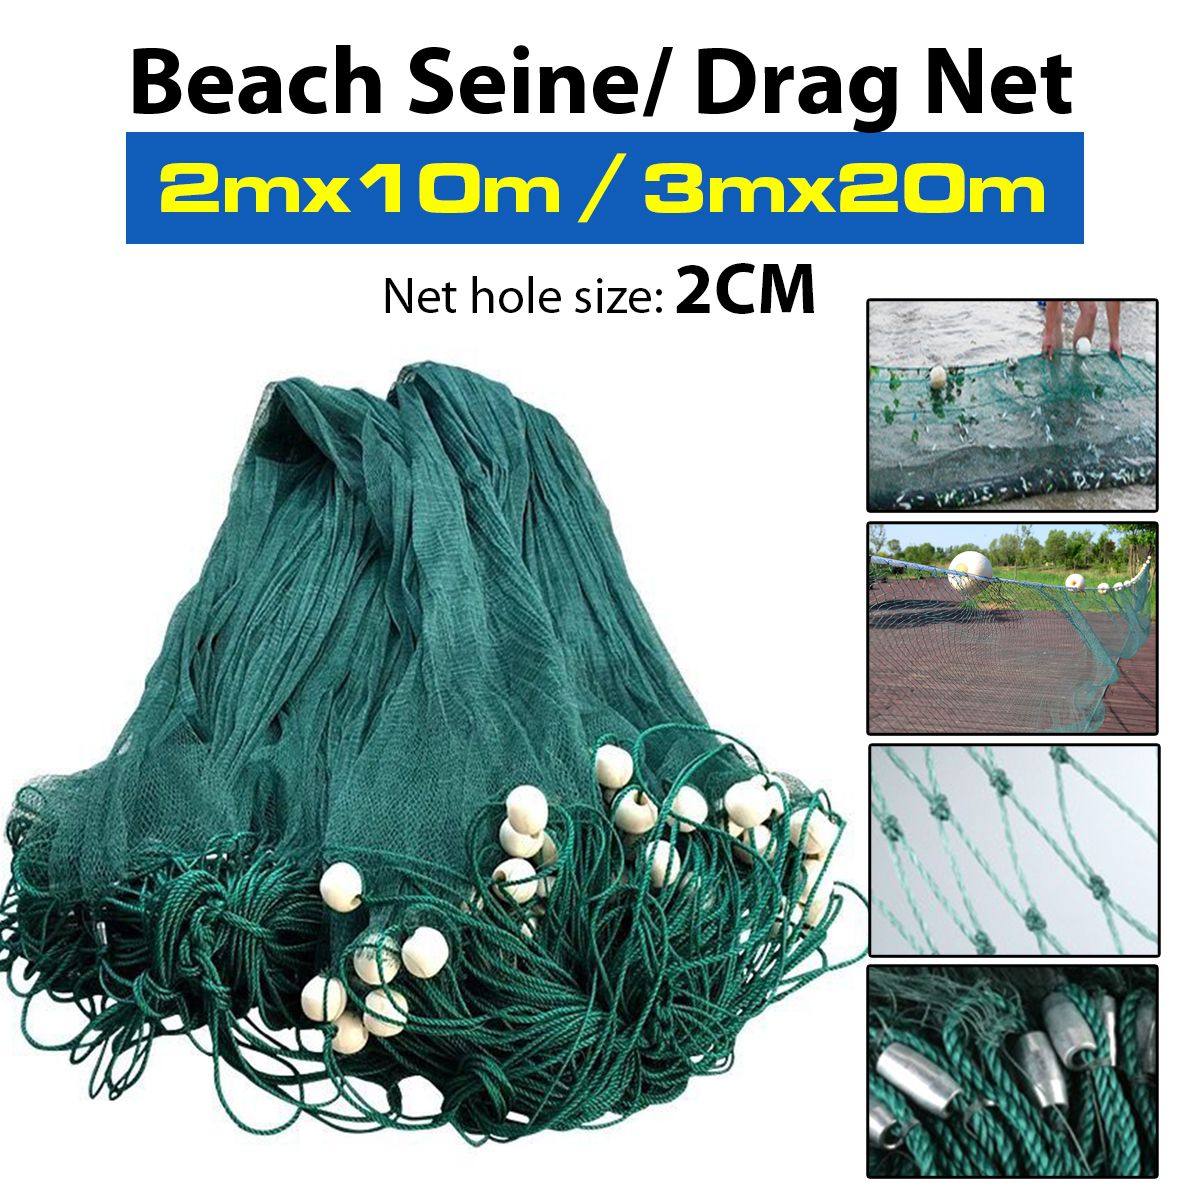 2x10M3x20M-Fishing-Drag-Net-Handmade-Beach-Seine-Monofilament-Fish-Cast-Mesh-Sinker-Gill-Trap-1367519